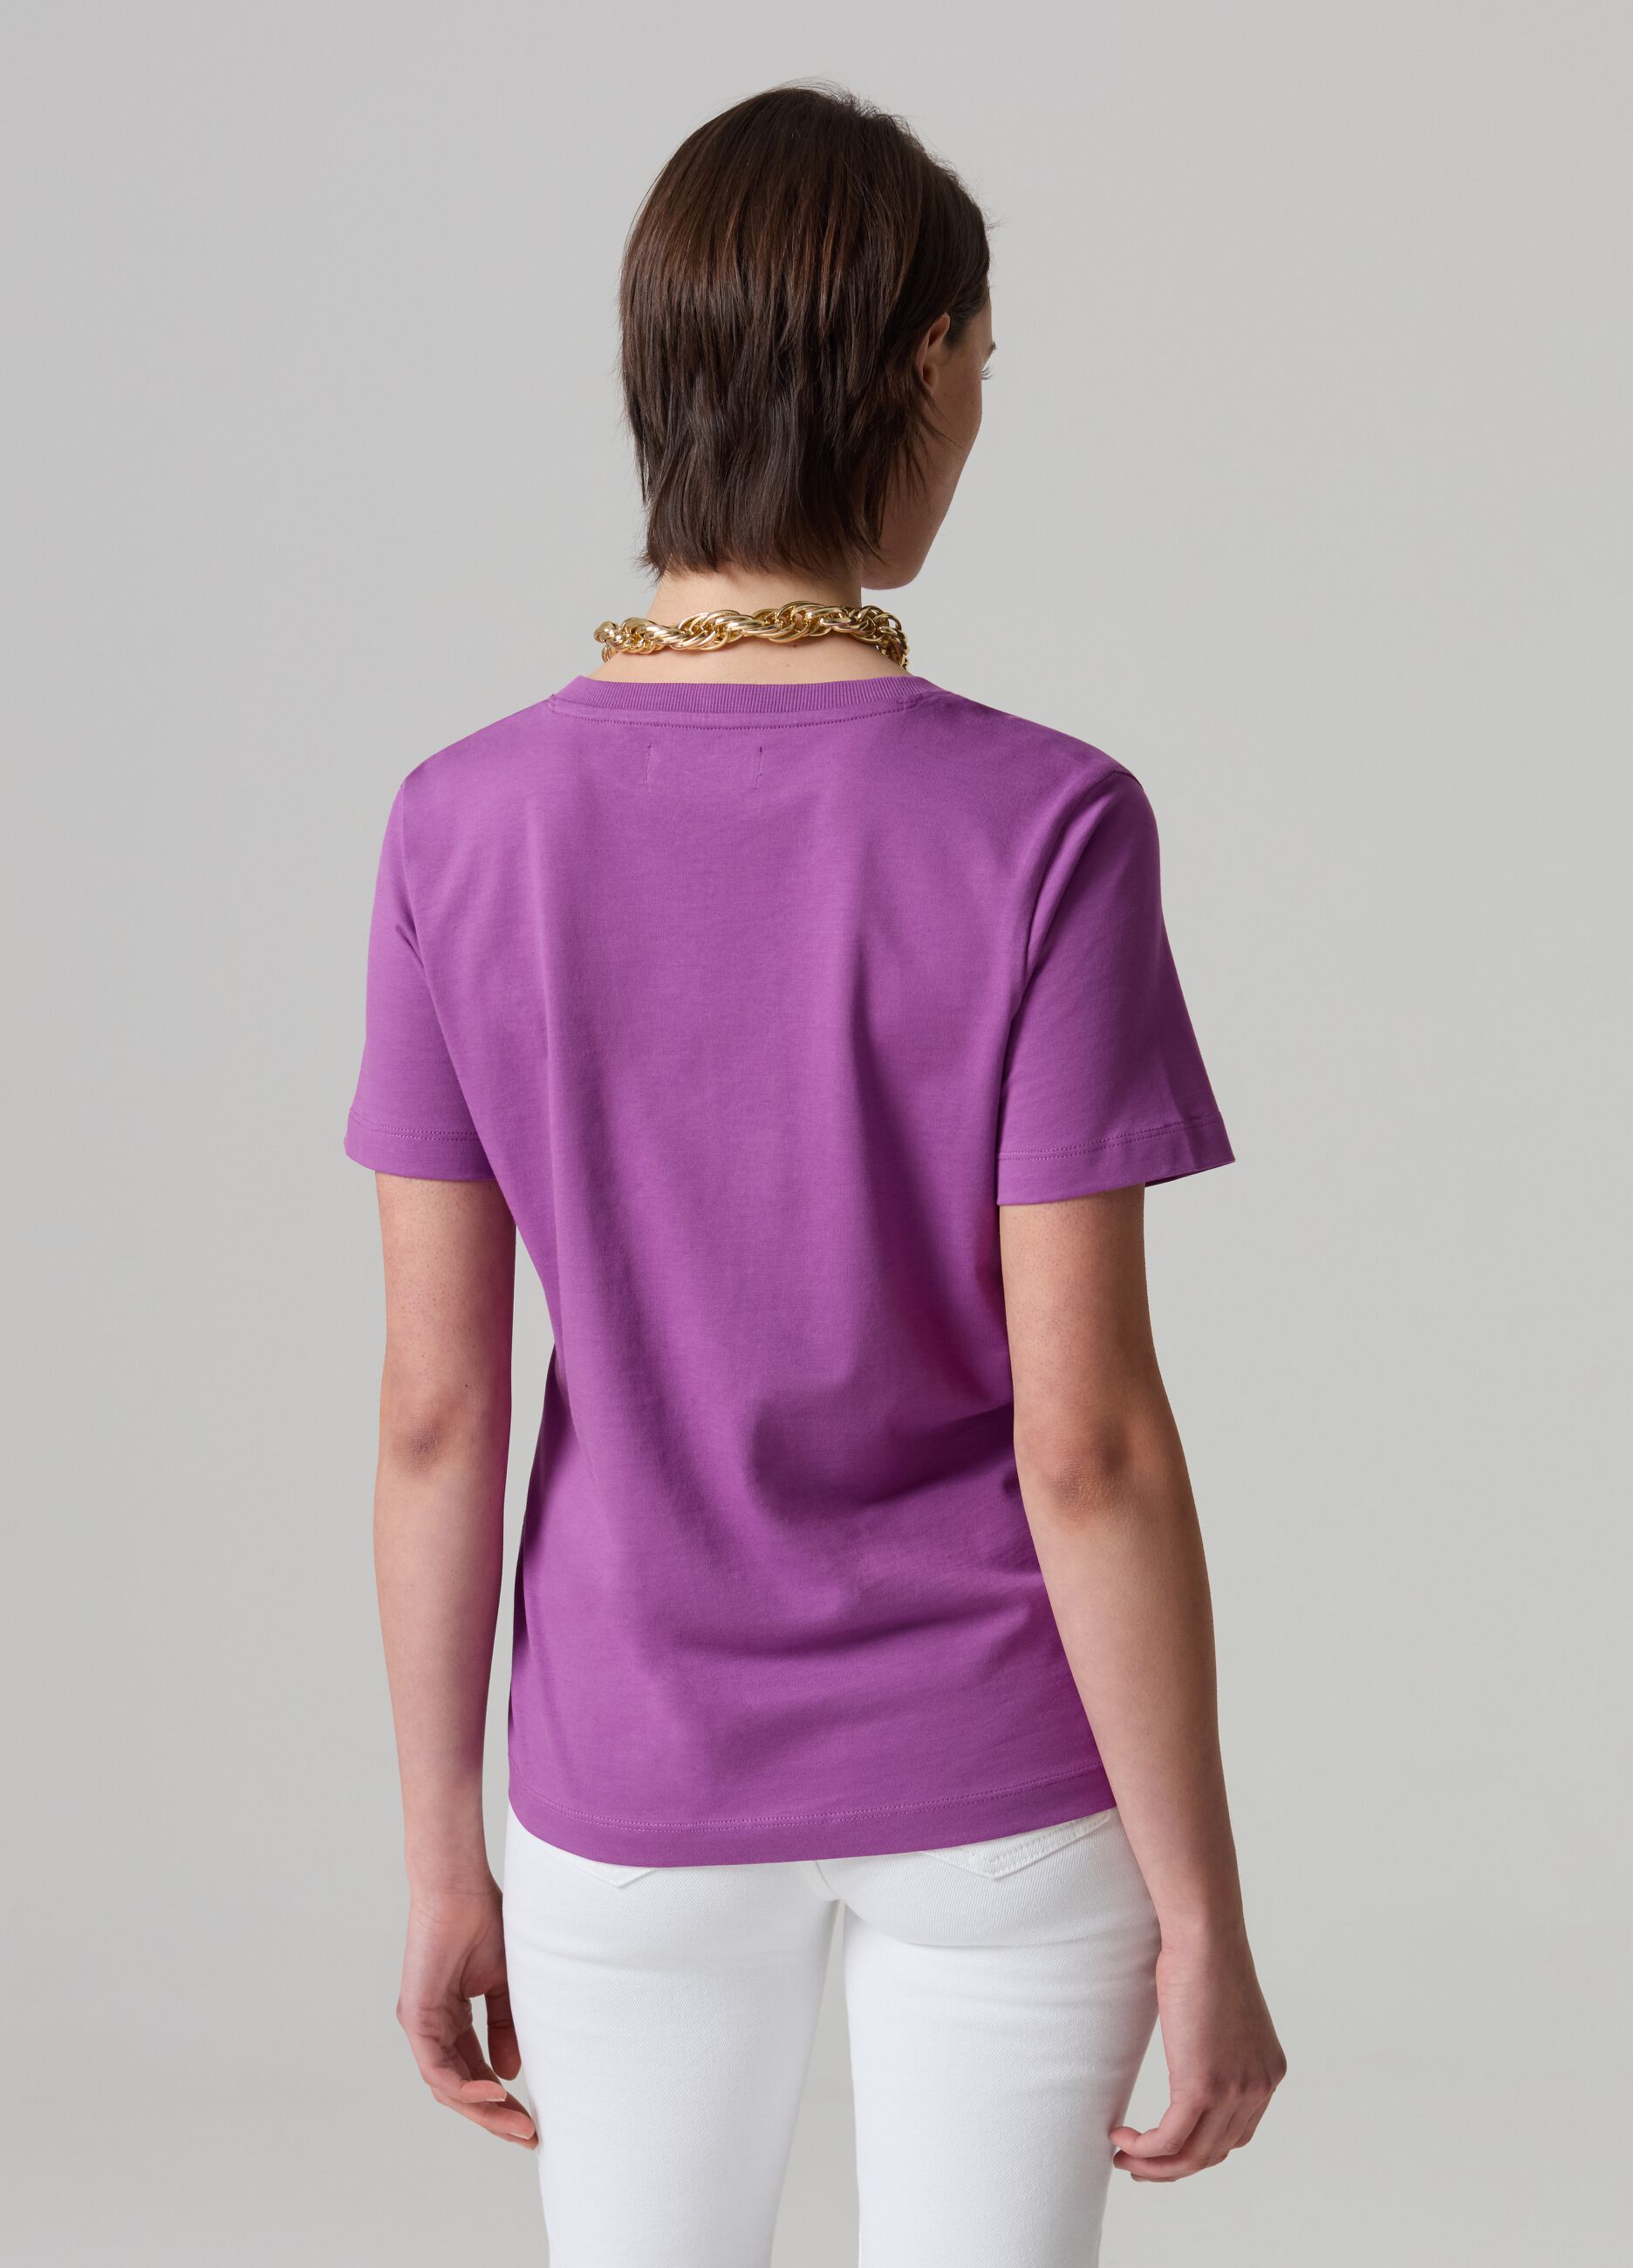 Cotton V-neck T-shirt